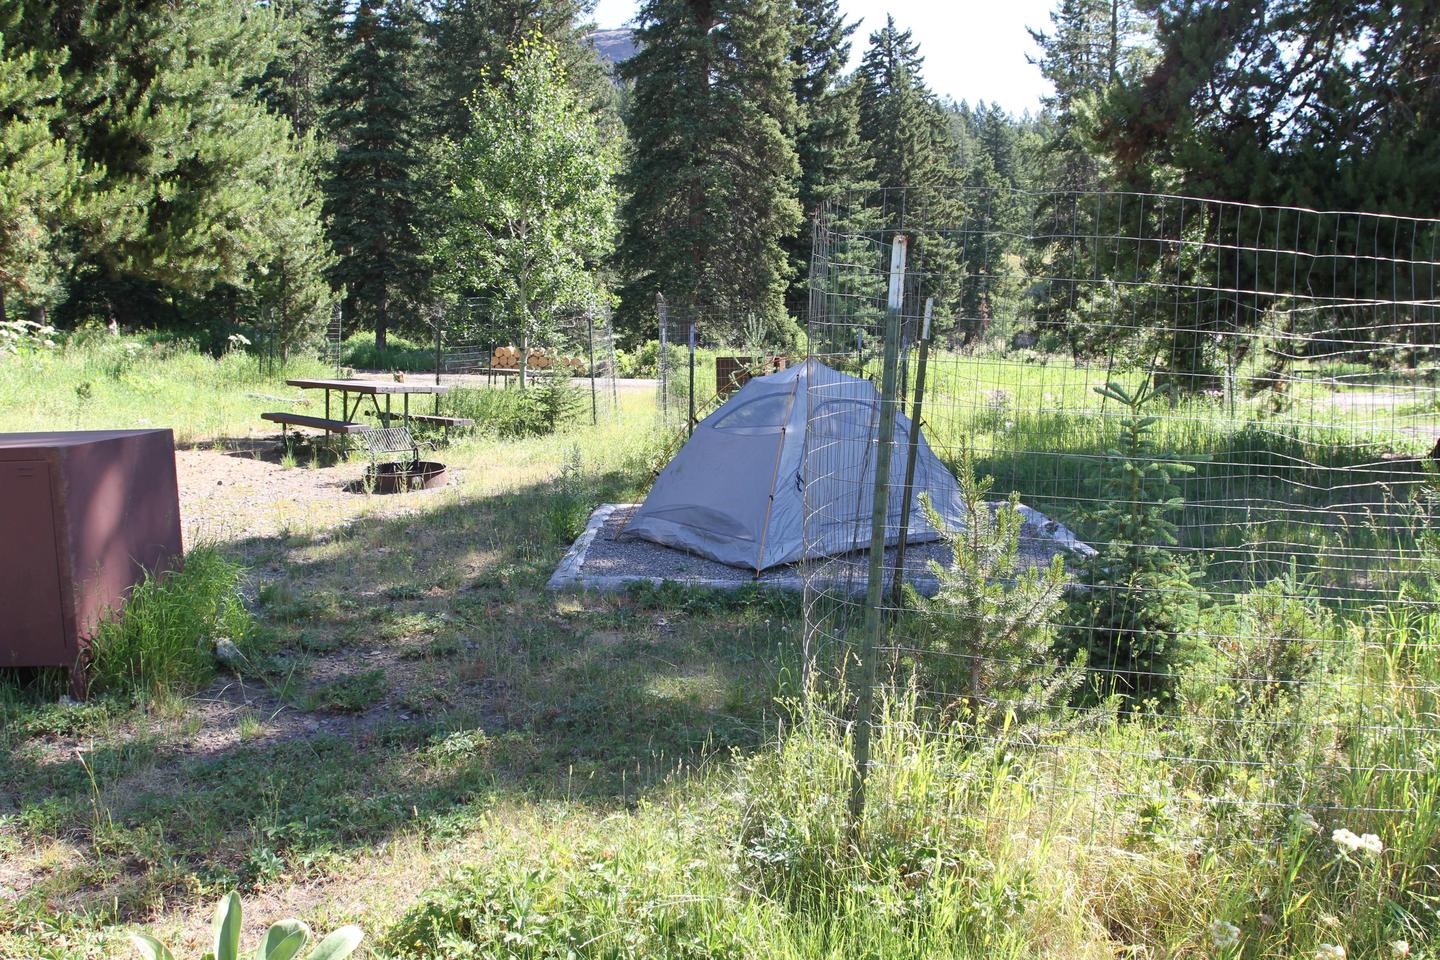 Pebble Creek Campground site #3.Pebble Creek Campground site #3